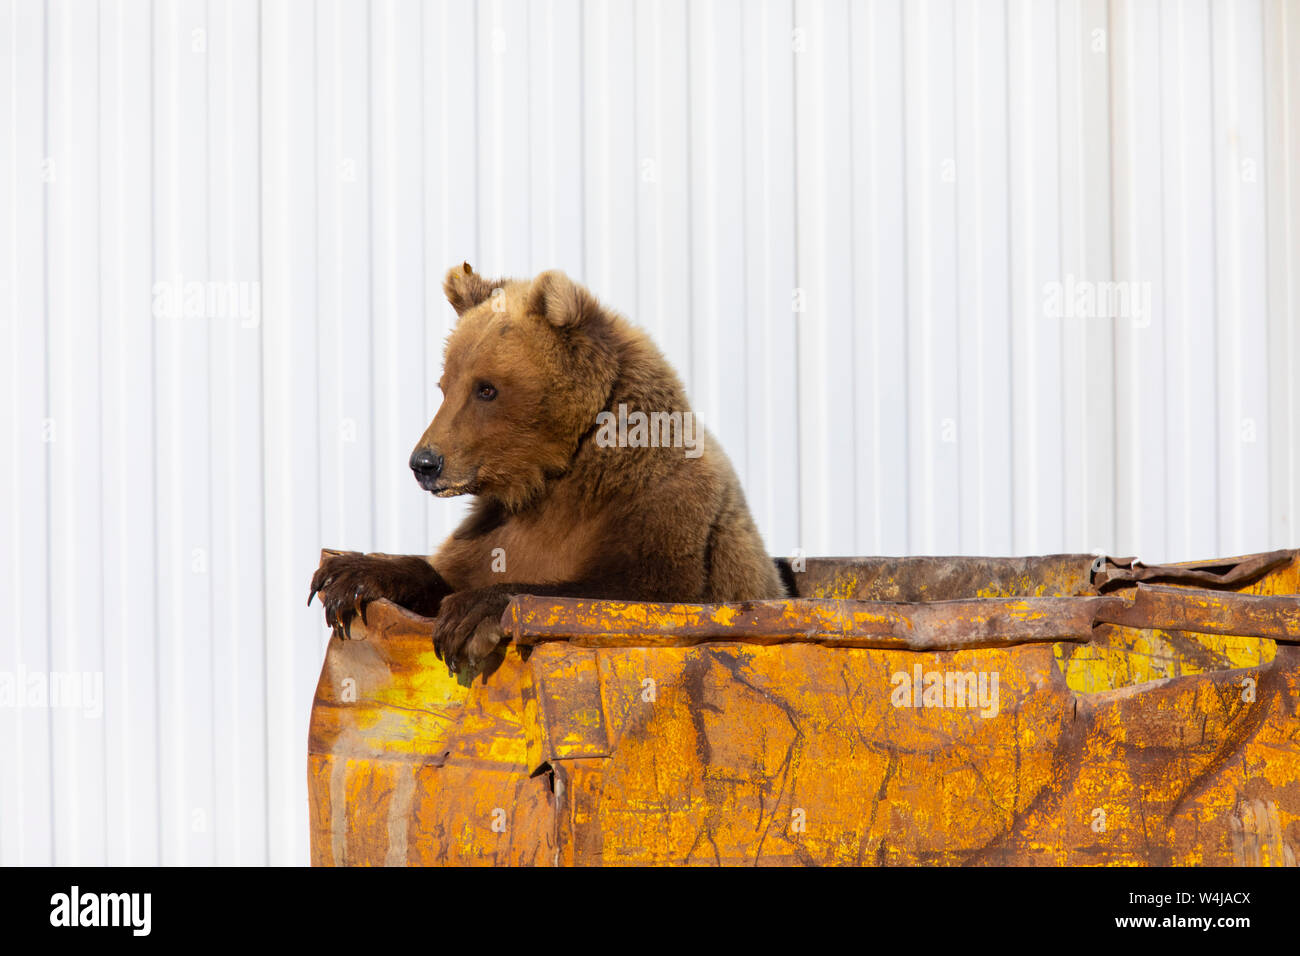 Brown bear in a dumpster, Deadhorse, Alaska. Stock Photo